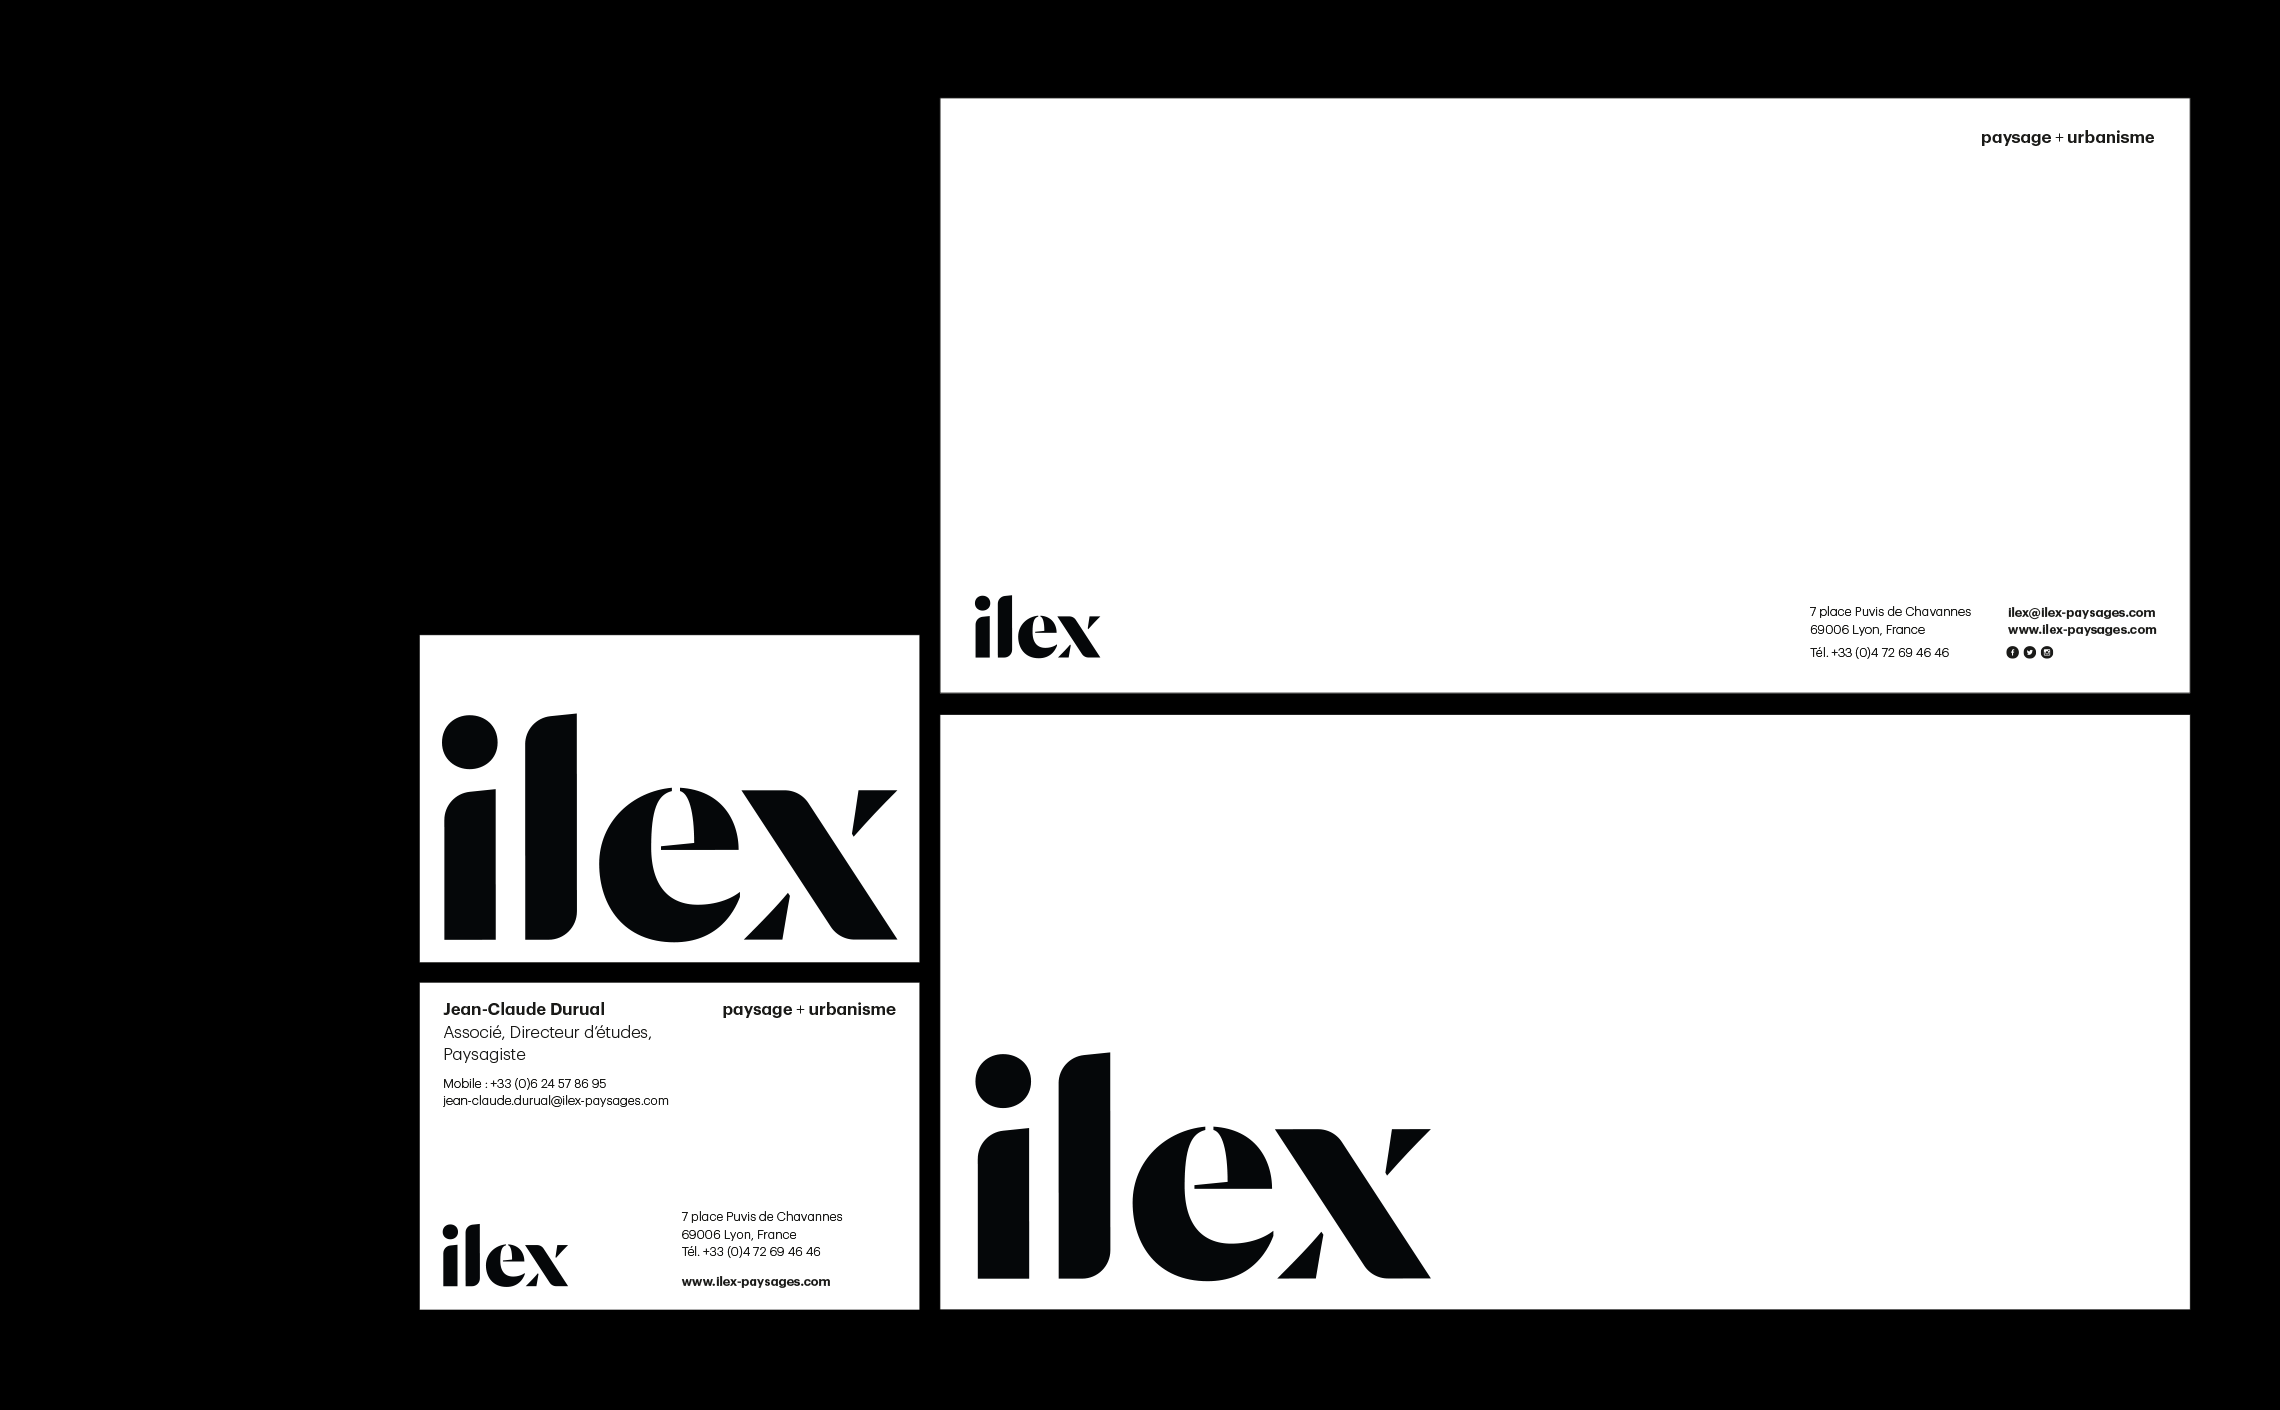 Ilex-images-web02